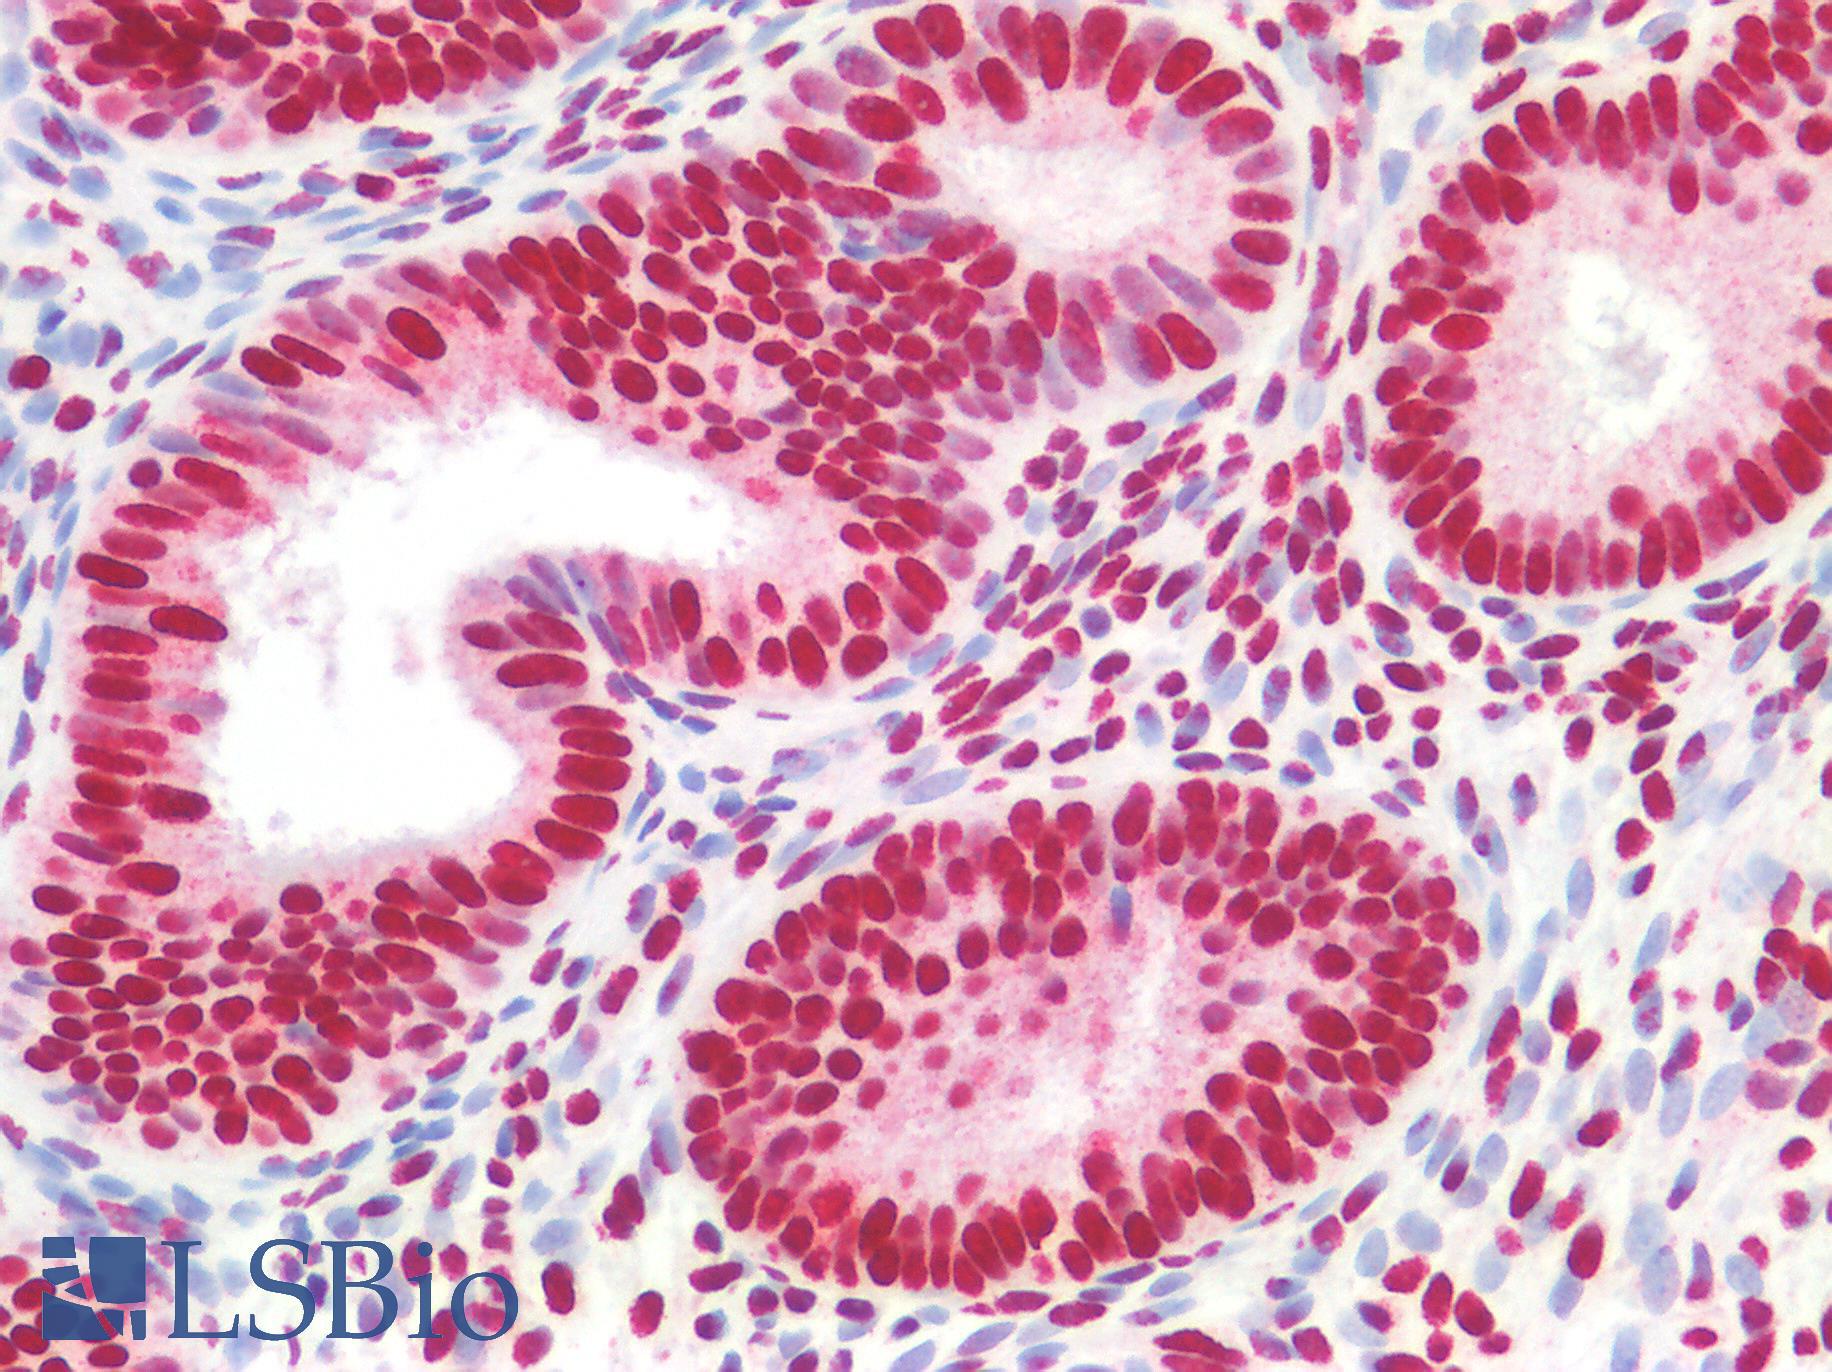 CBX5 / HP1 Alpha Antibody - Human Uterus: Formalin-Fixed, Paraffin-Embedded (FFPE)